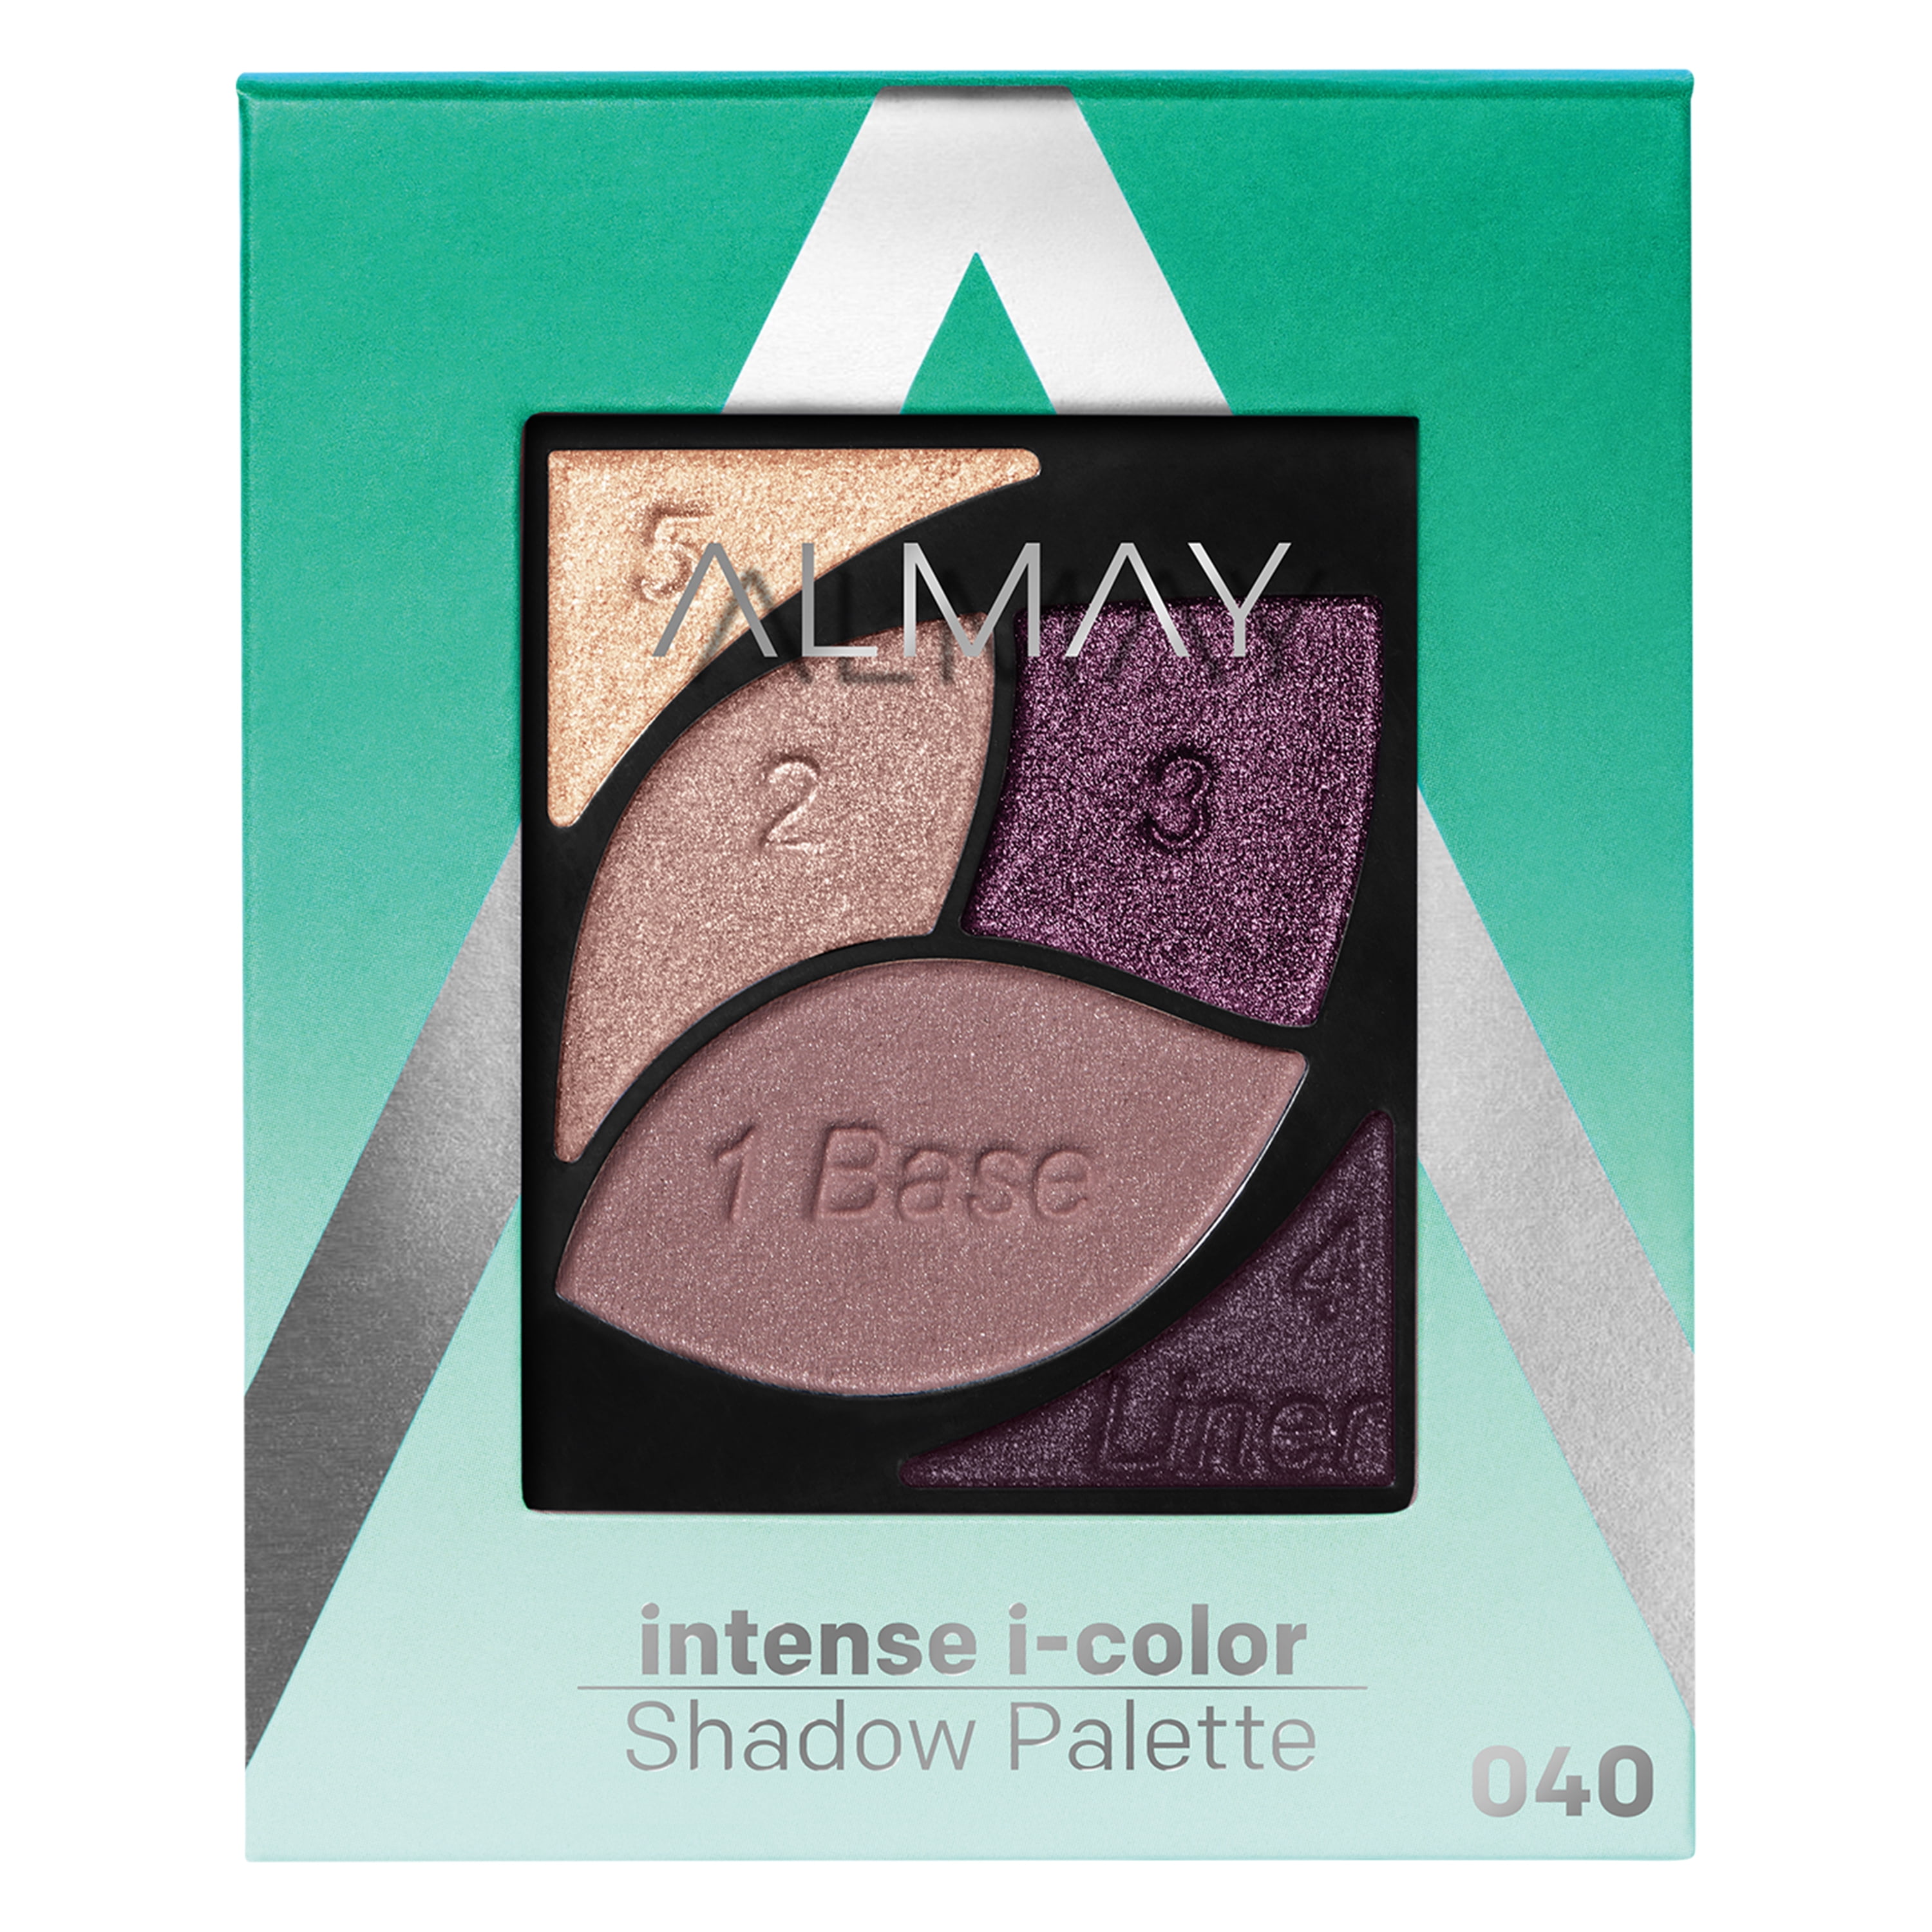 Almay Intense I-Color Enhancing Eyeshadow Palette, 040 Green Eyes, 0.1 oz.